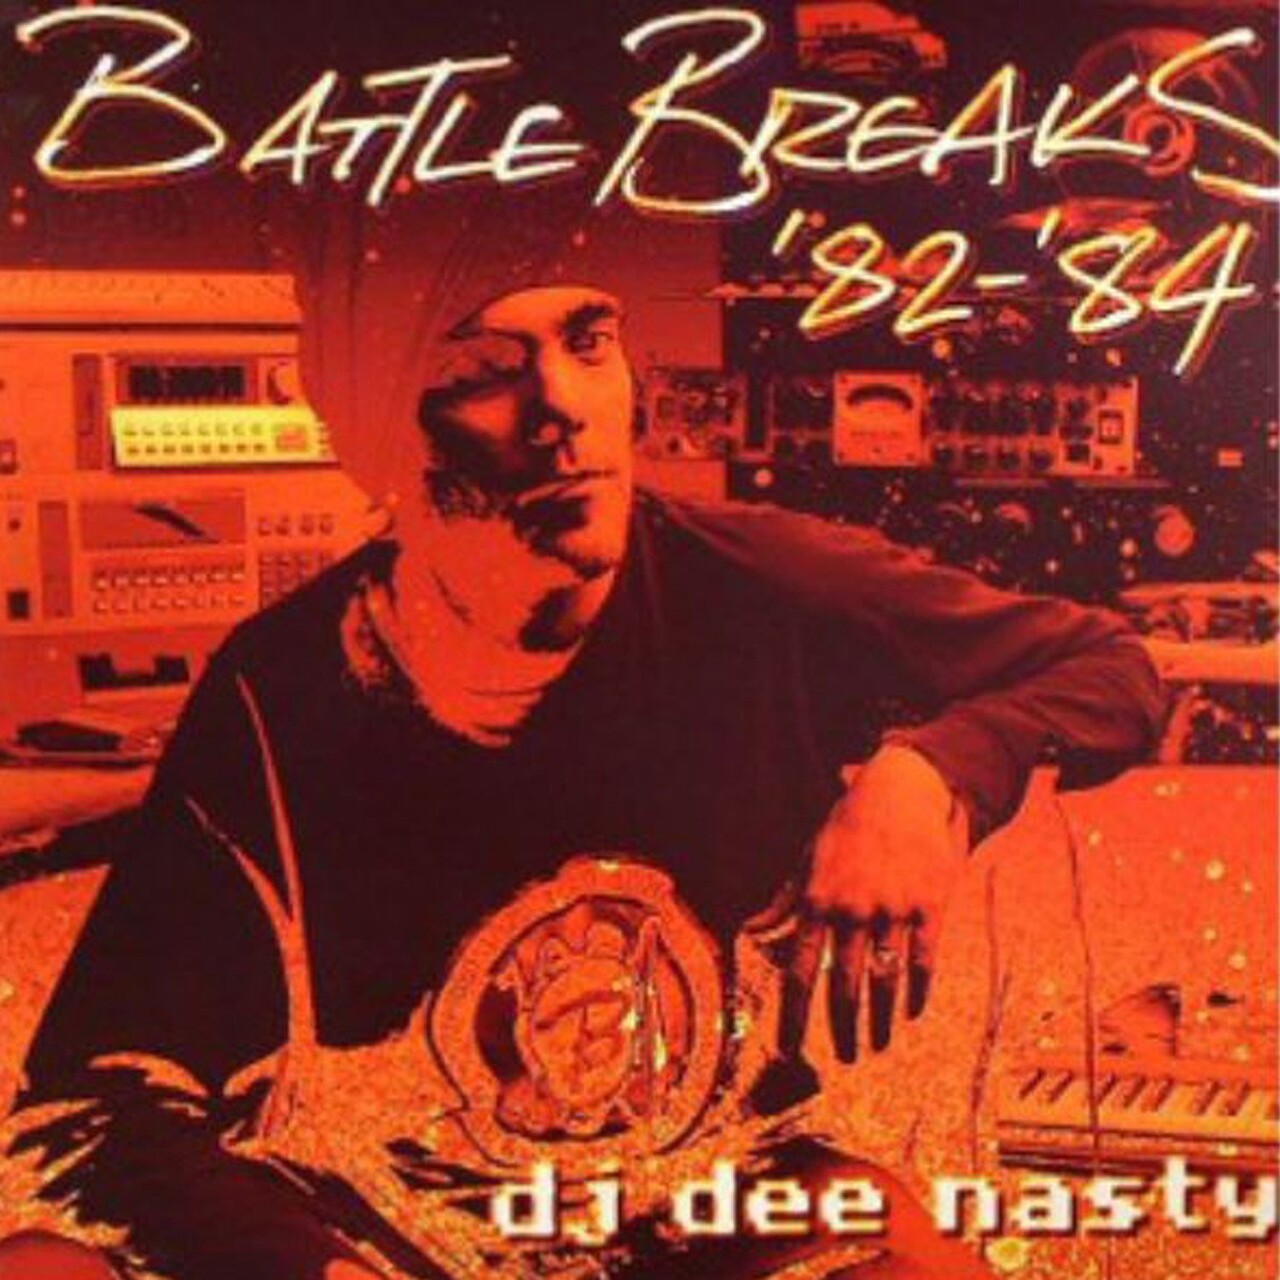 Dj dee. DJ Dee Nasty. Break Battle. DJ Dee Иваново. Пластина рэп.